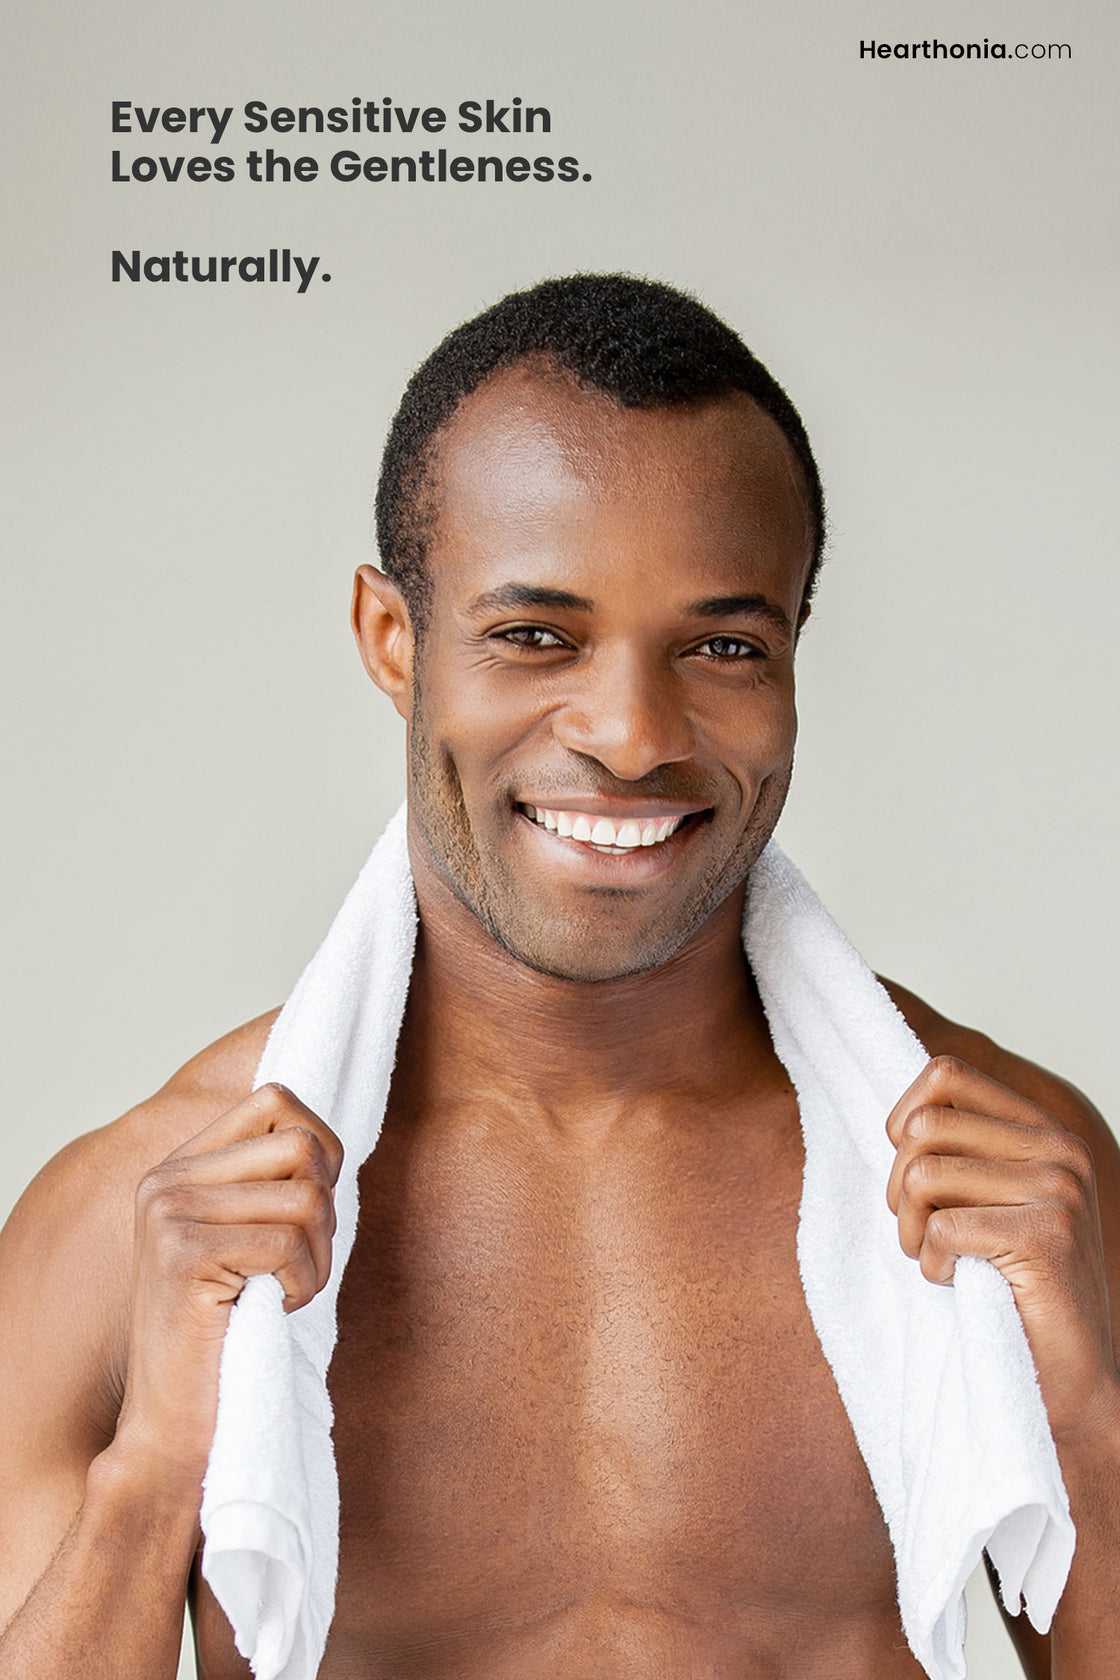 Usage of Druide Energizen Organic Shower Gel, man smiling with bath towel